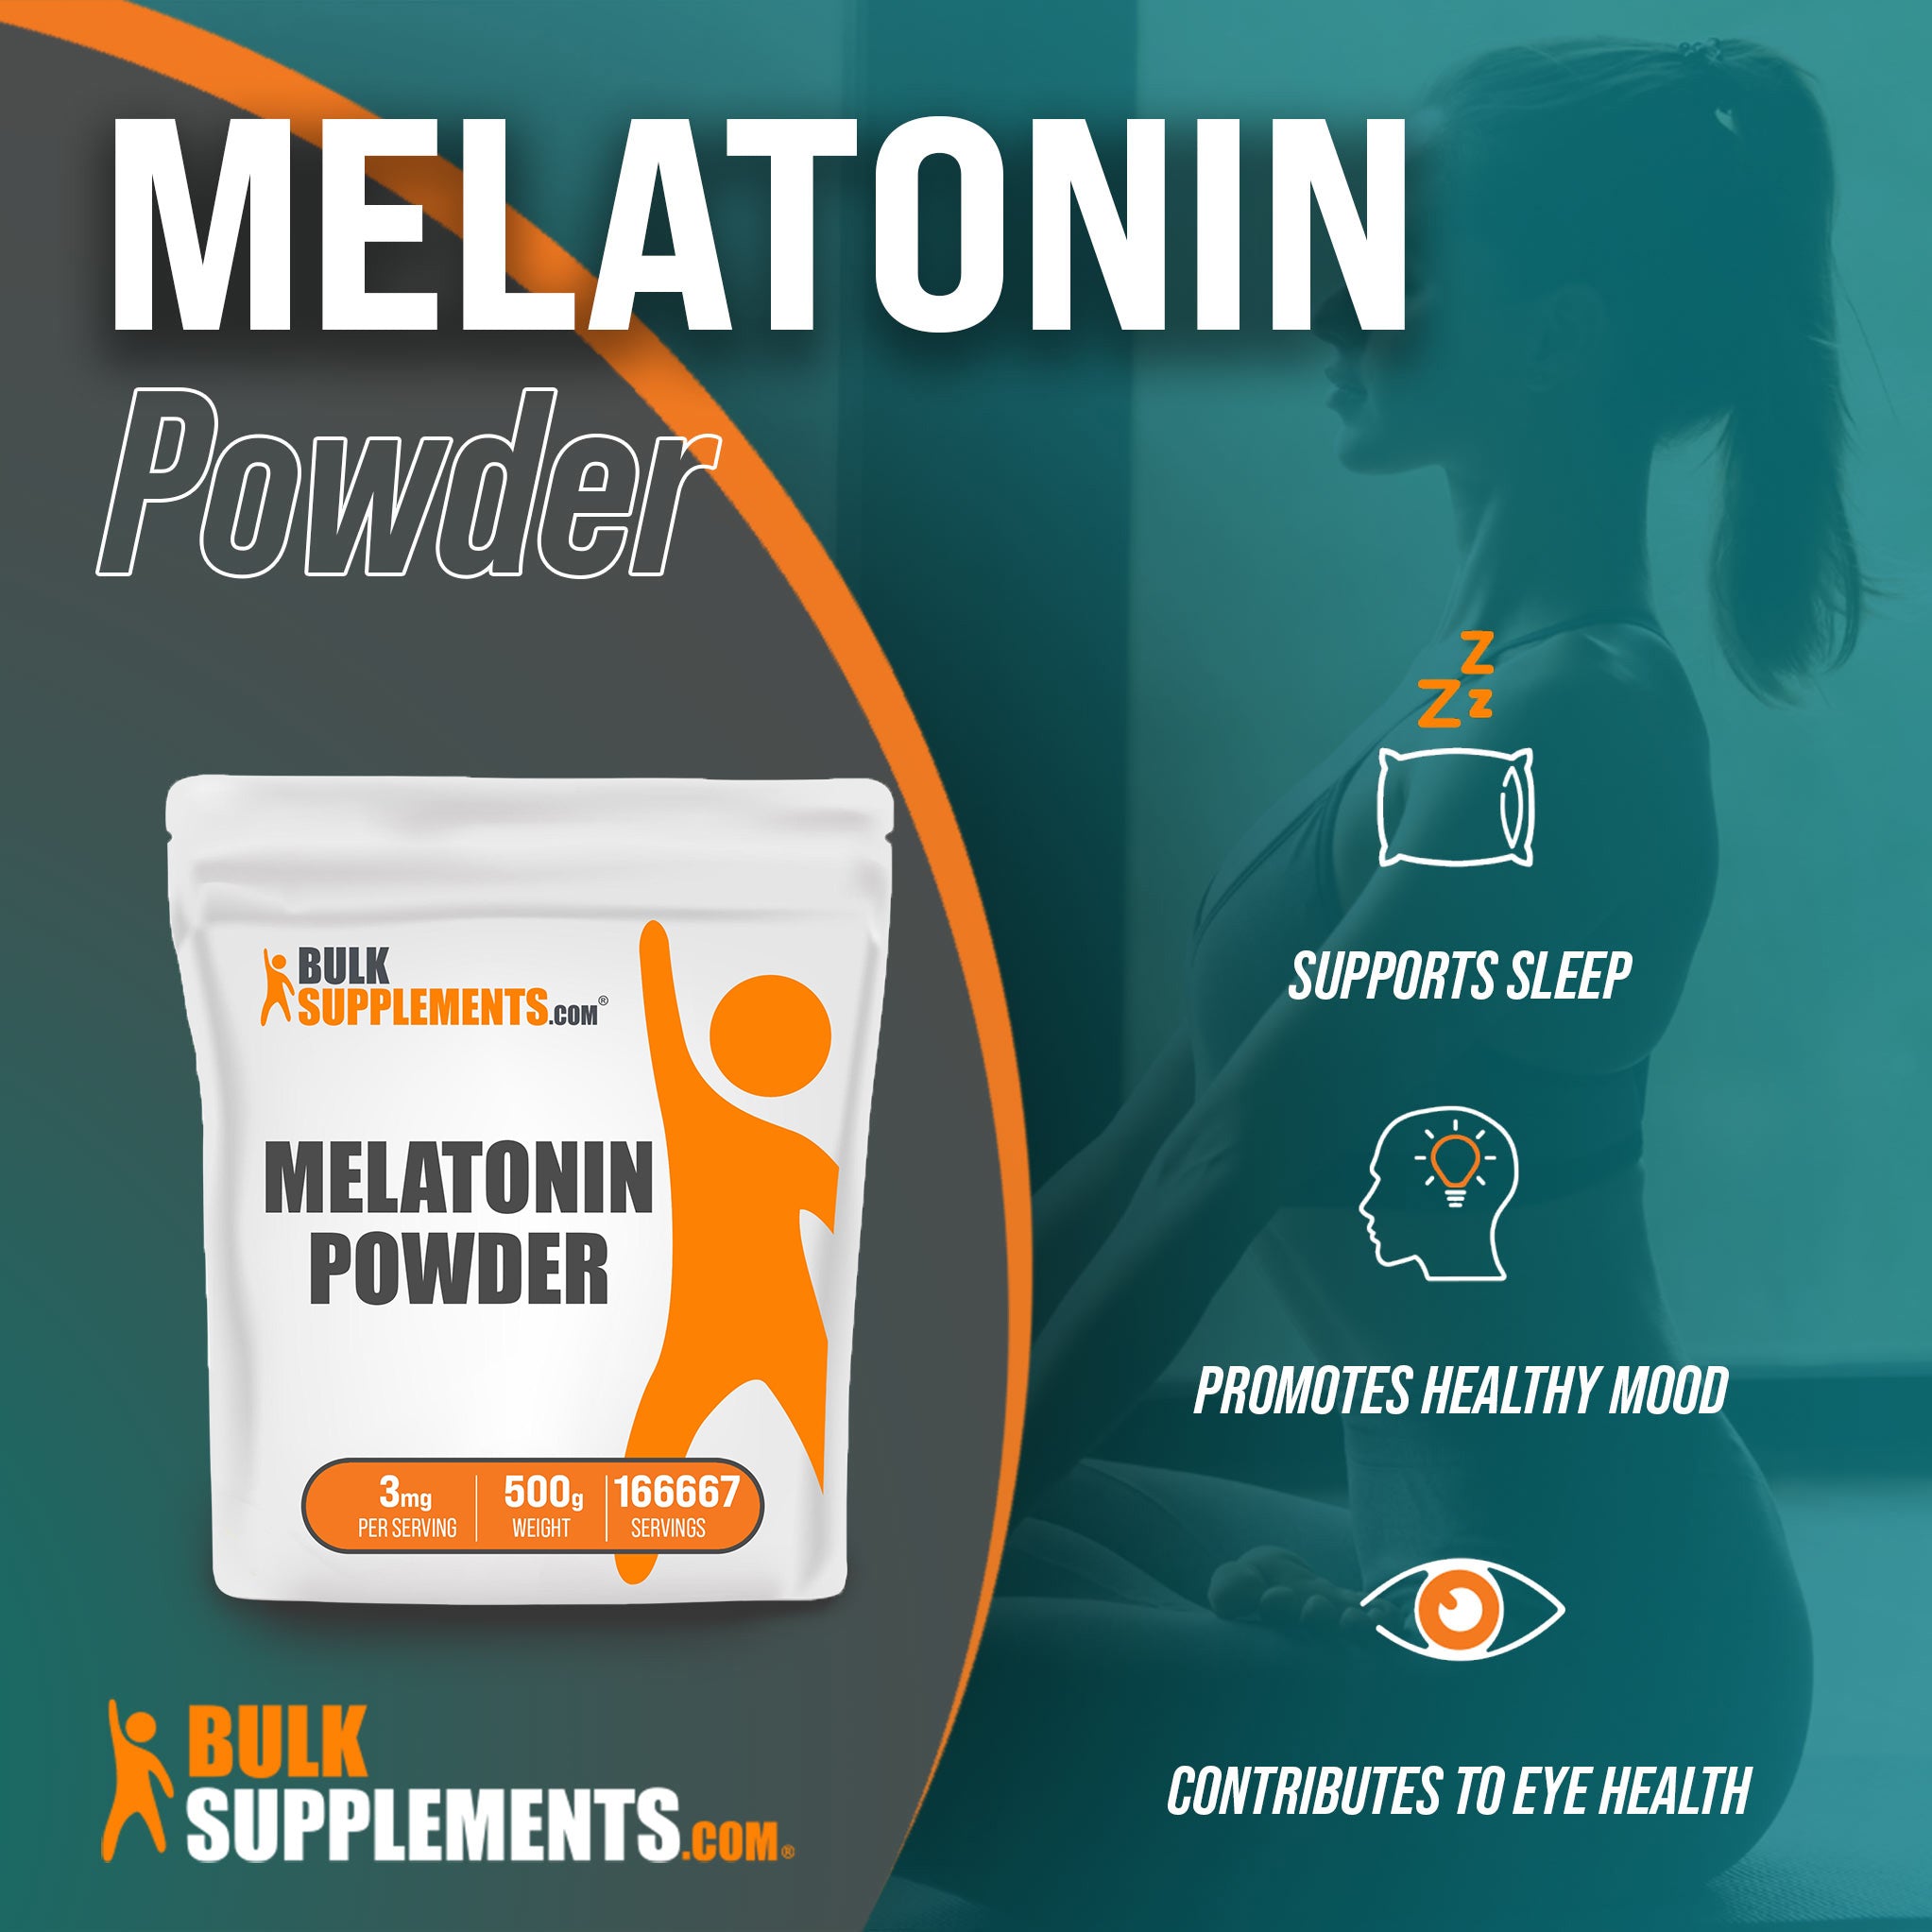 Benefits of Melatonin: supports sleep, promotes healthy mood, contributes healthy mood